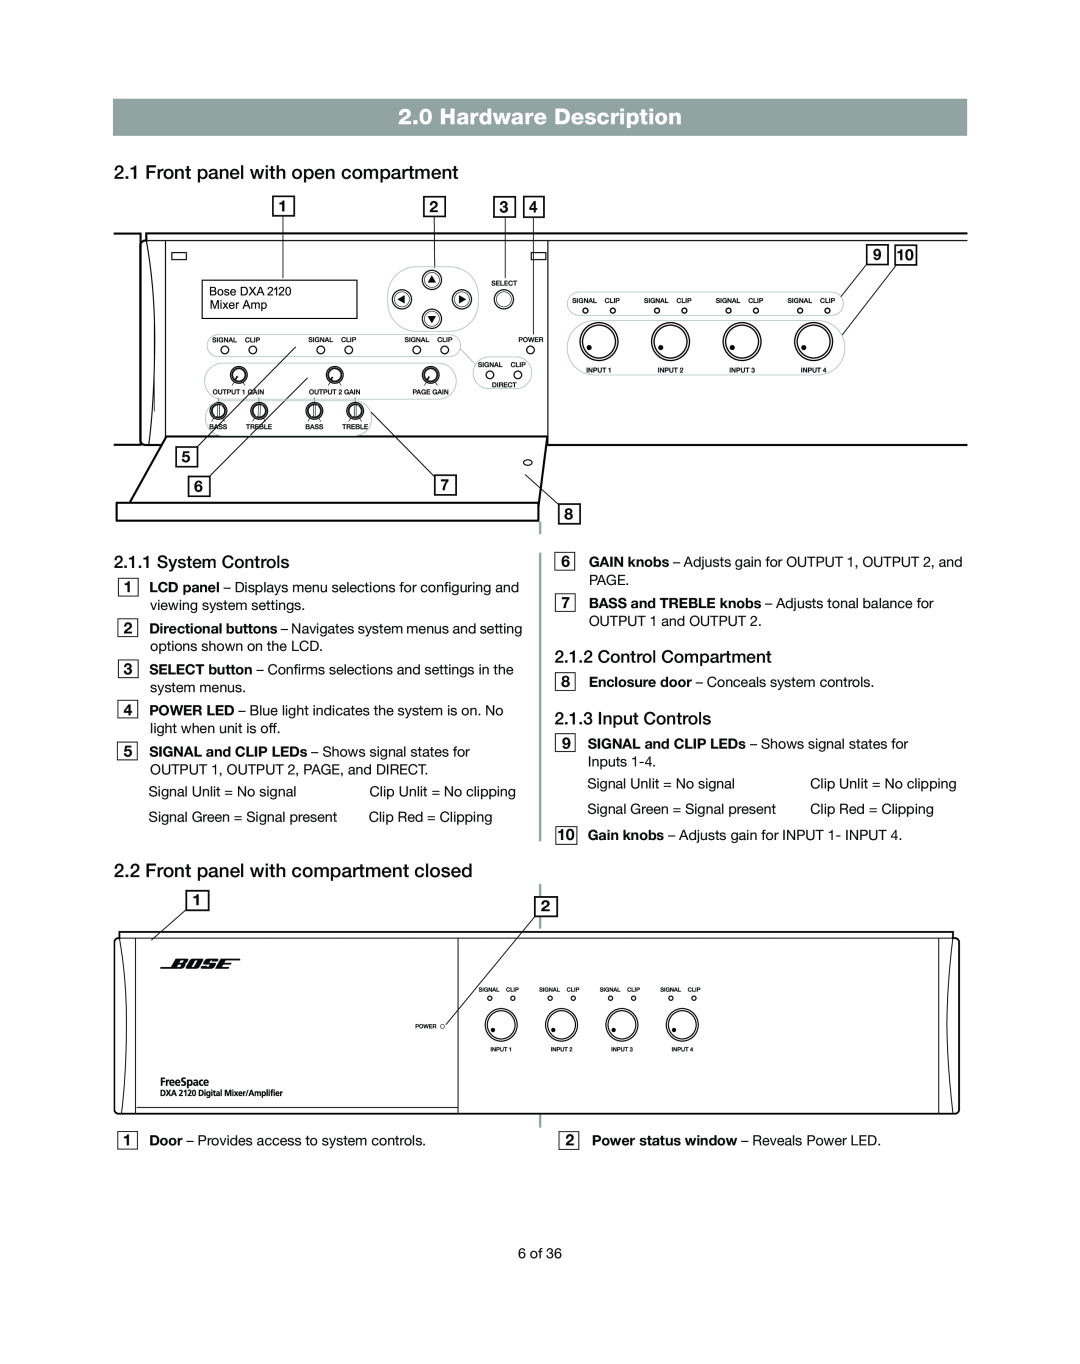 Bose DXA2120 manual 2.0Hardware Description, 2.1Front panel with open compartment, Front panel with compartment closed 